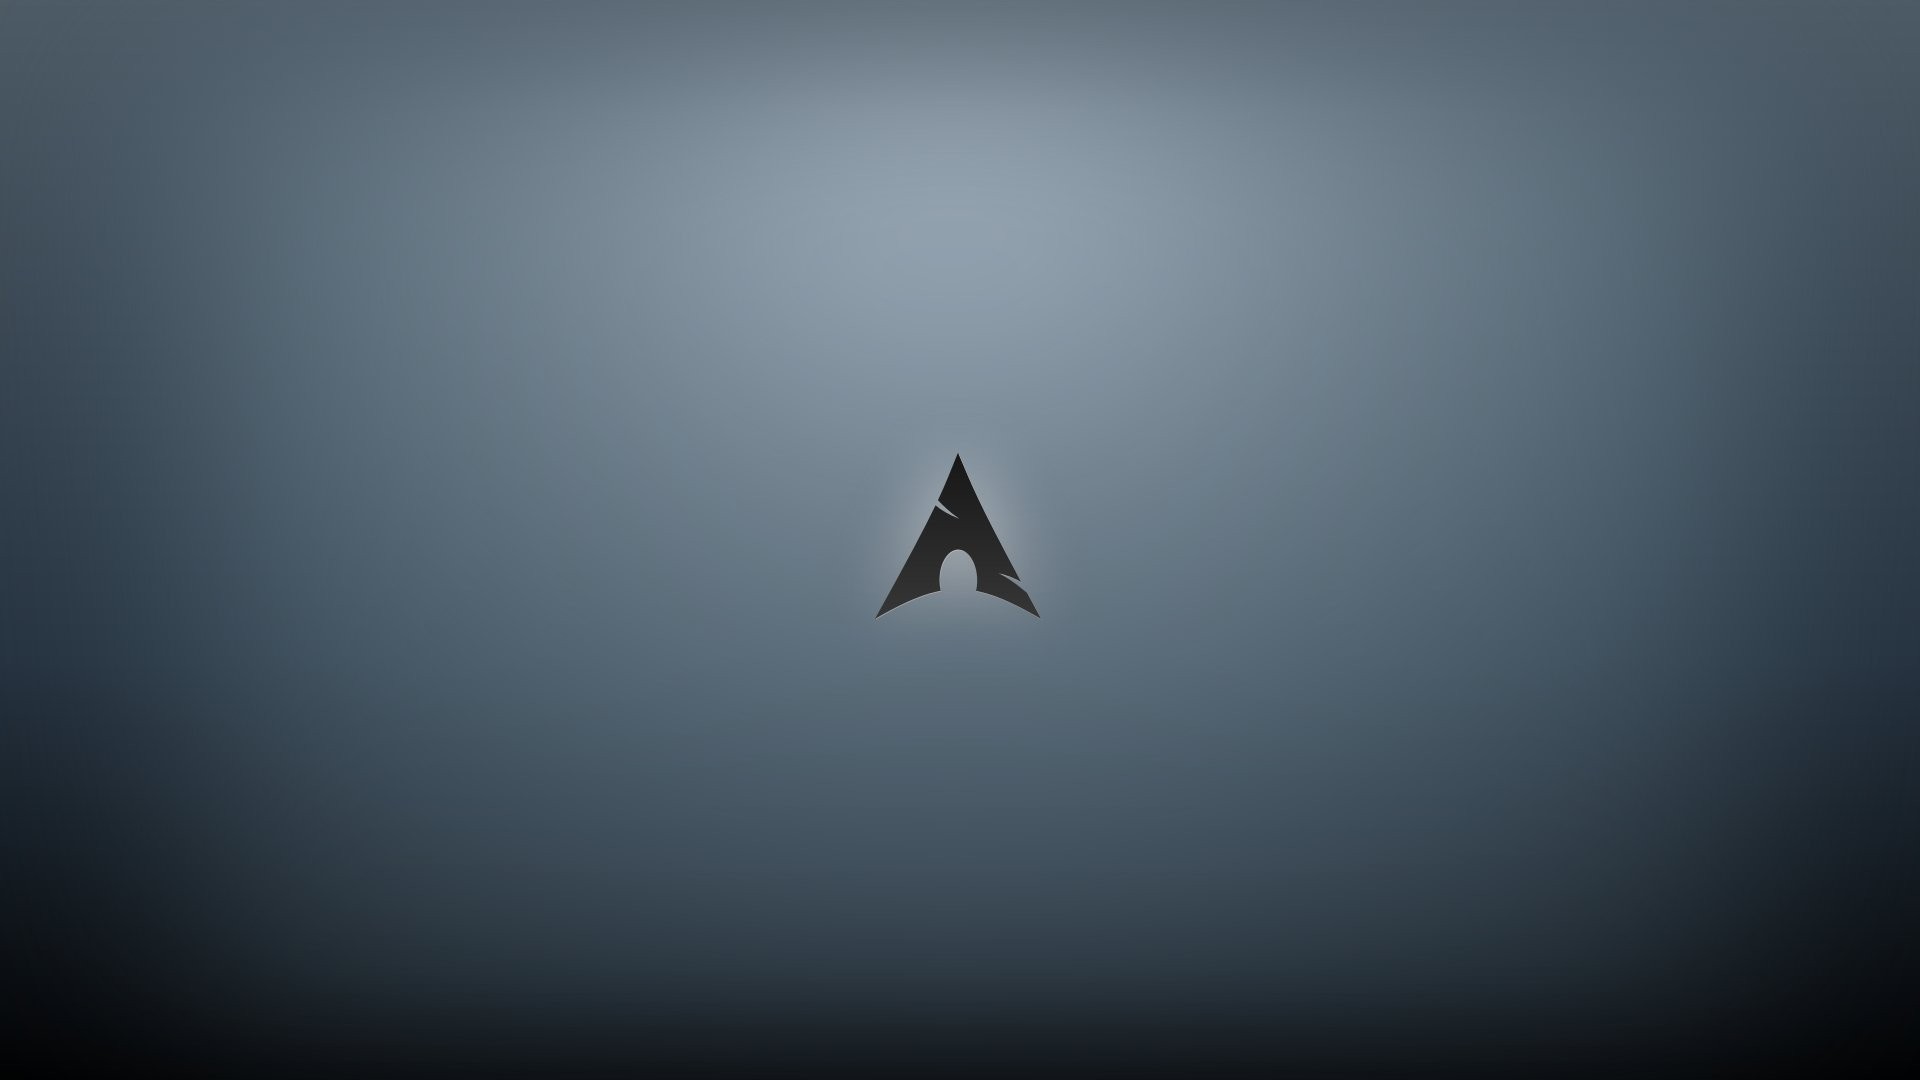 General 1920x1080 Arch Linux Linux logo gradient simple background digital art minimalism